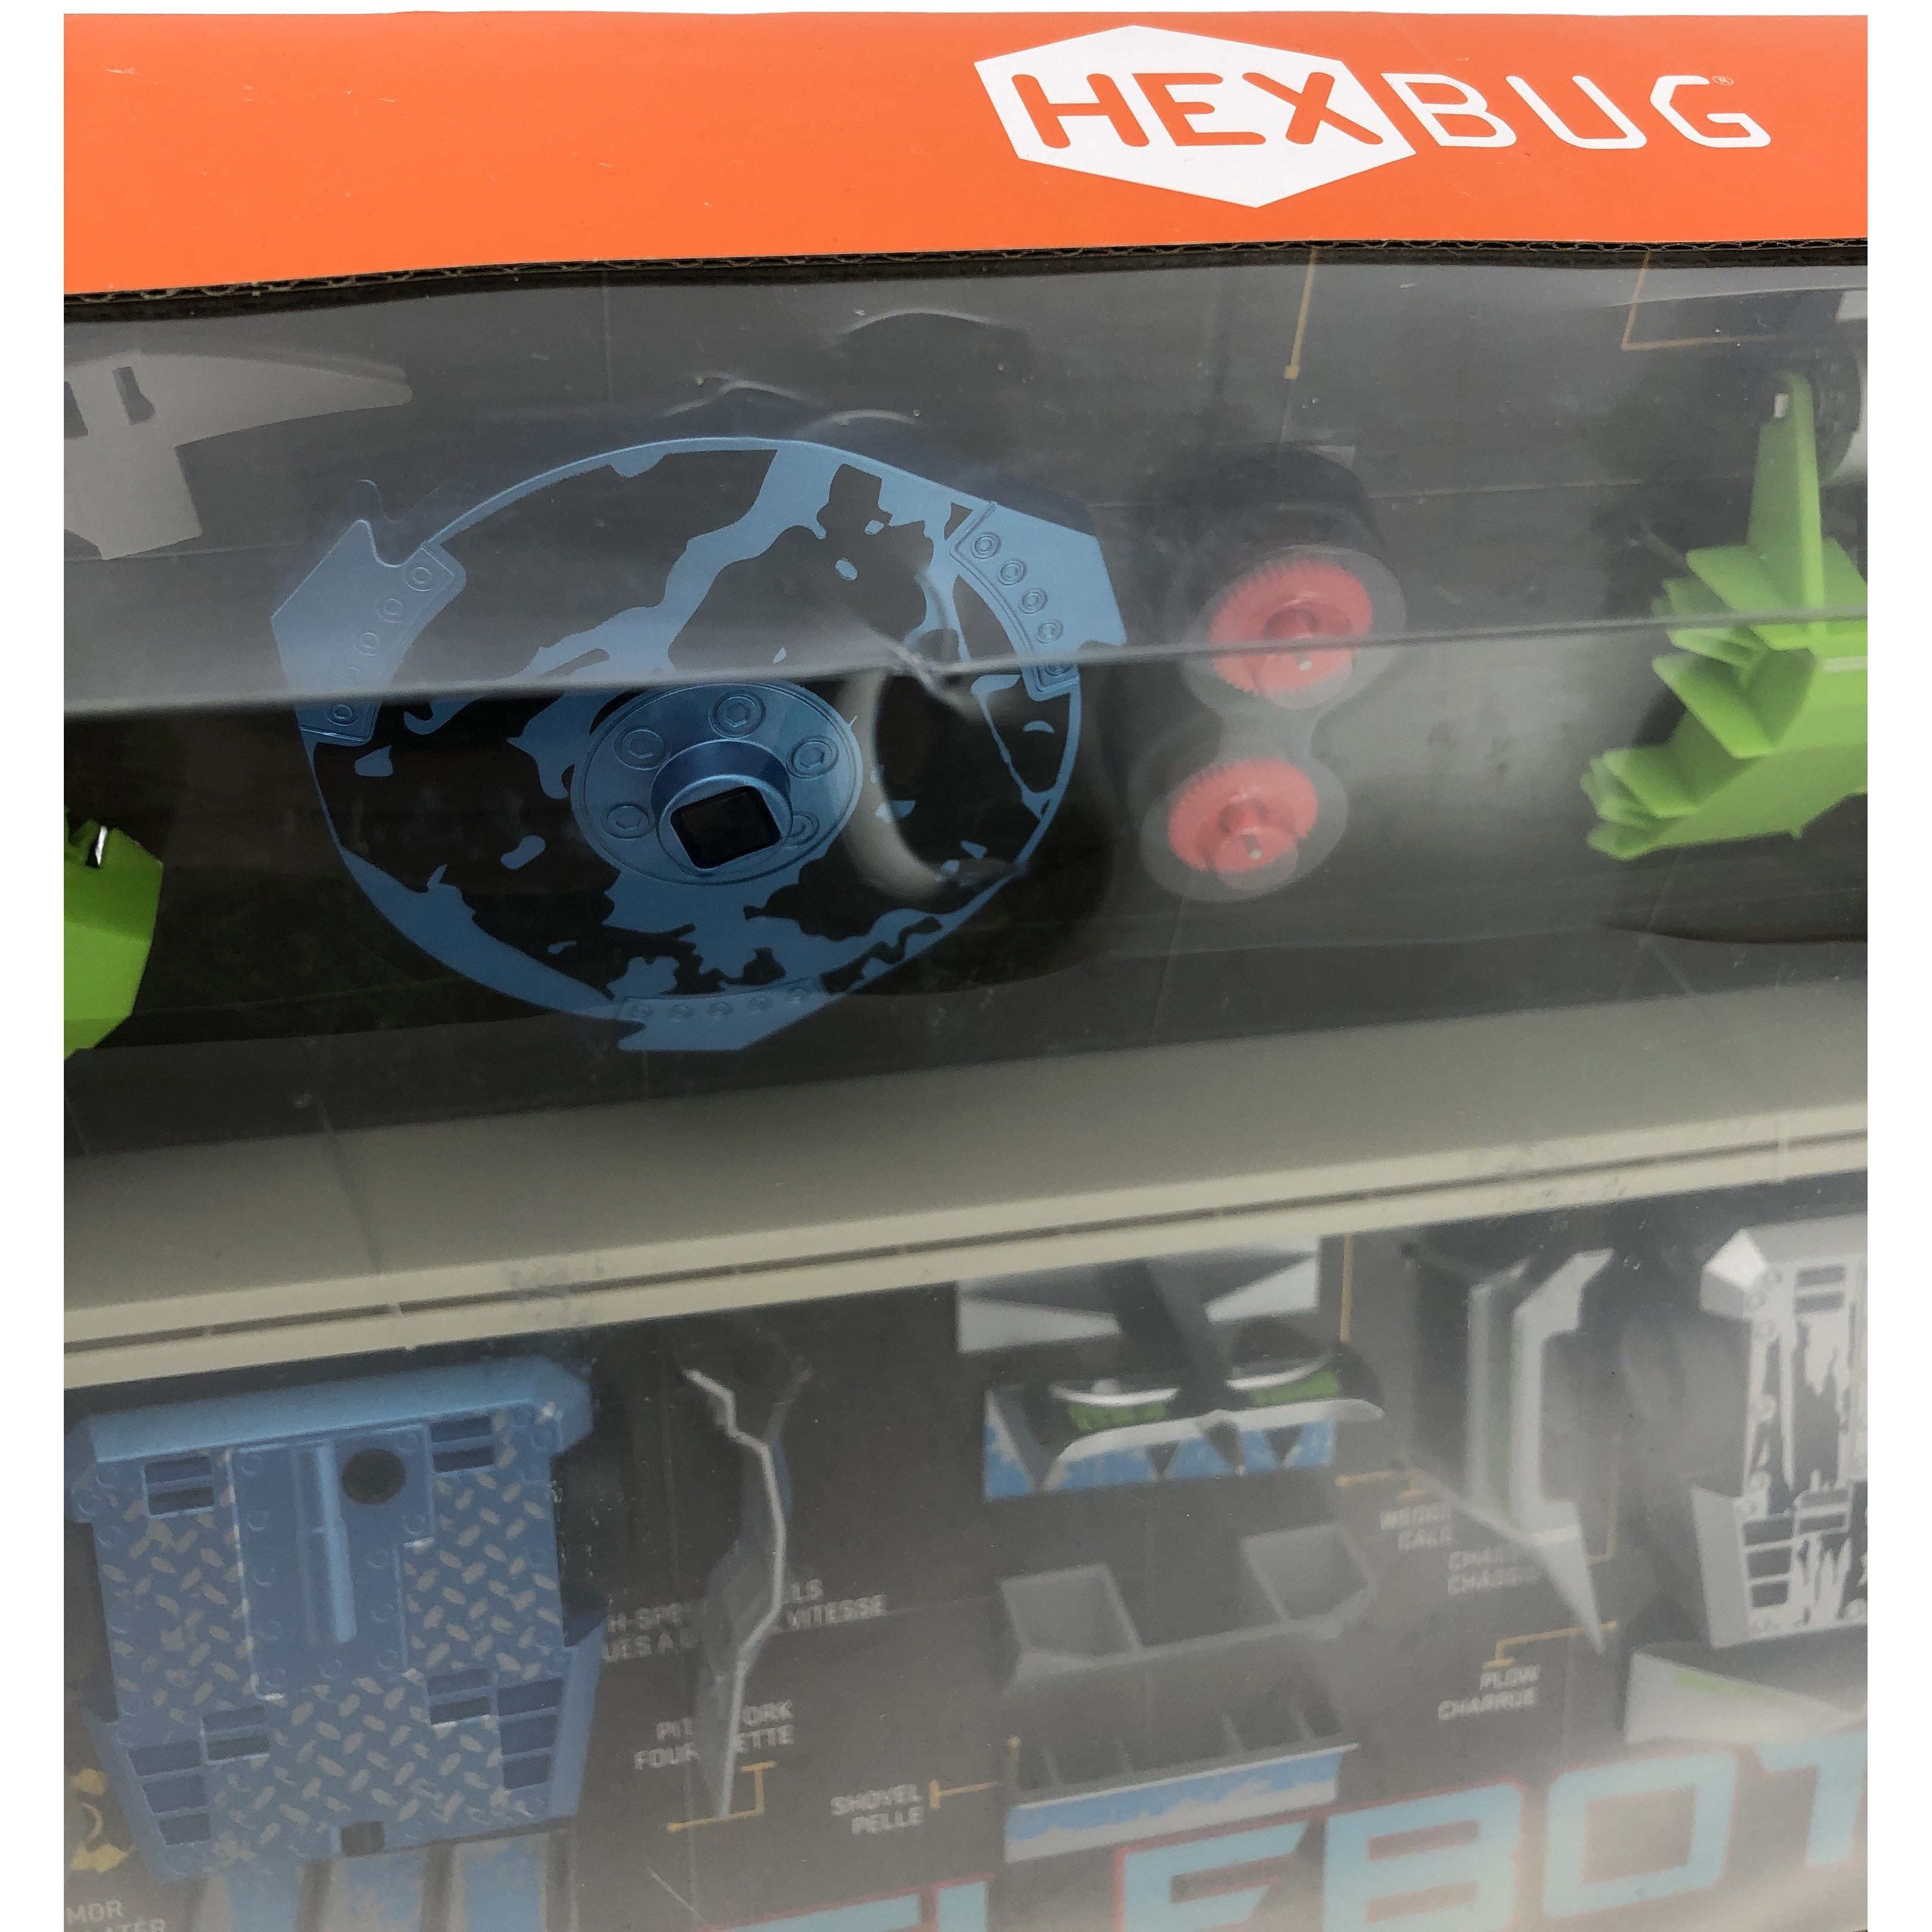 Hexbug build your own battle robots gift set